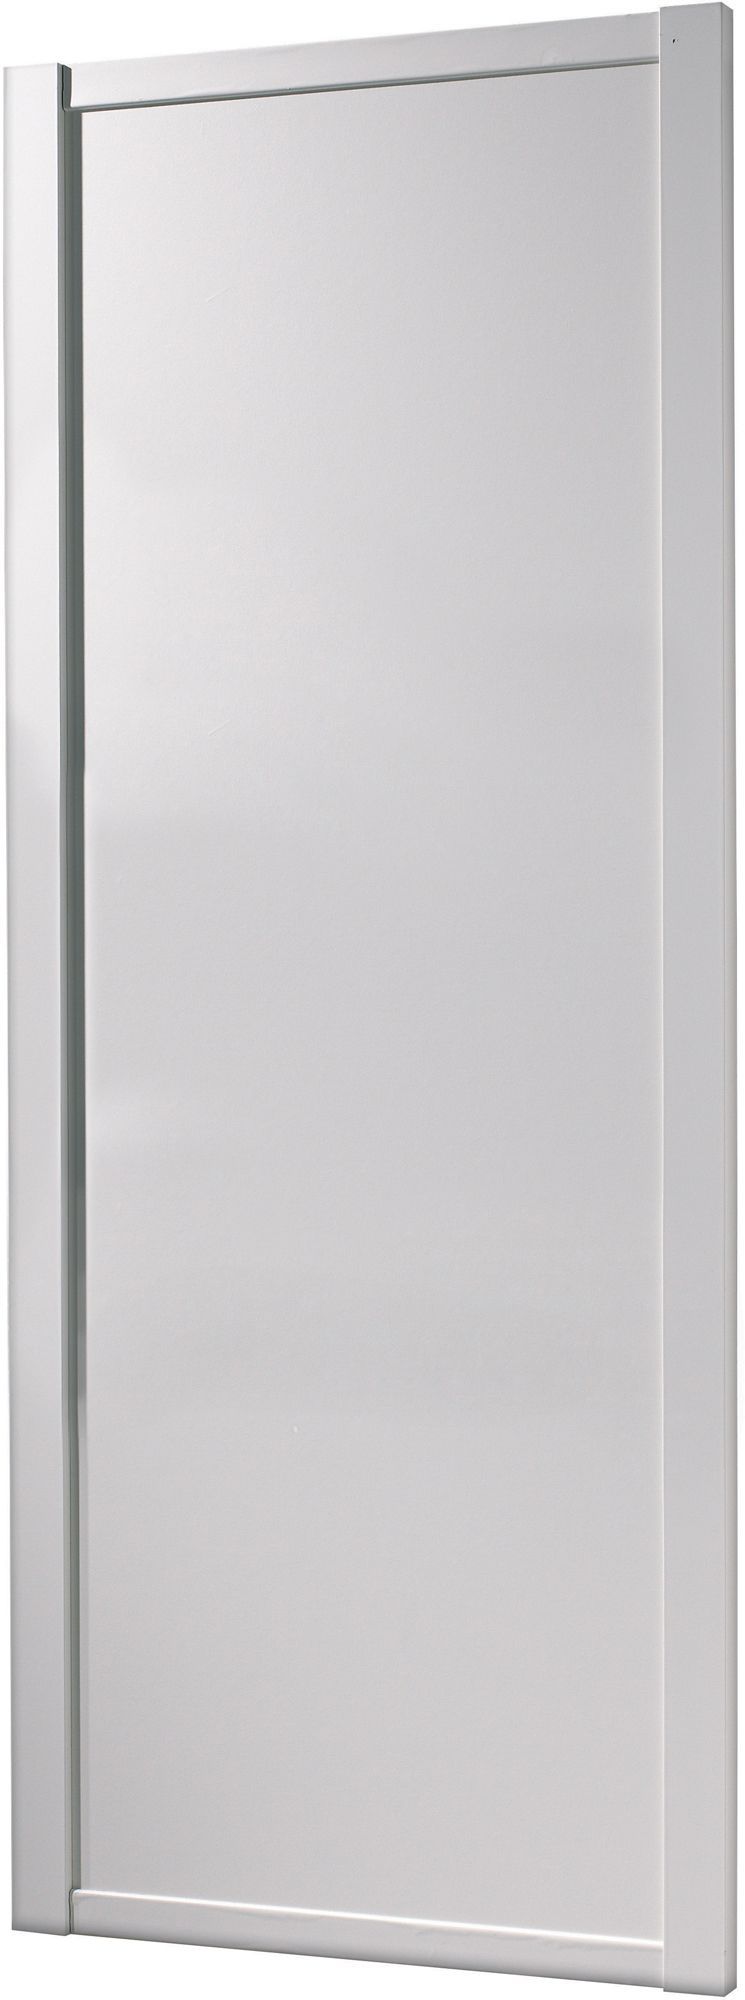 Spacepro Classic Shaker White Sliding wardrobe door (H) 2220mm x (W) 610mm